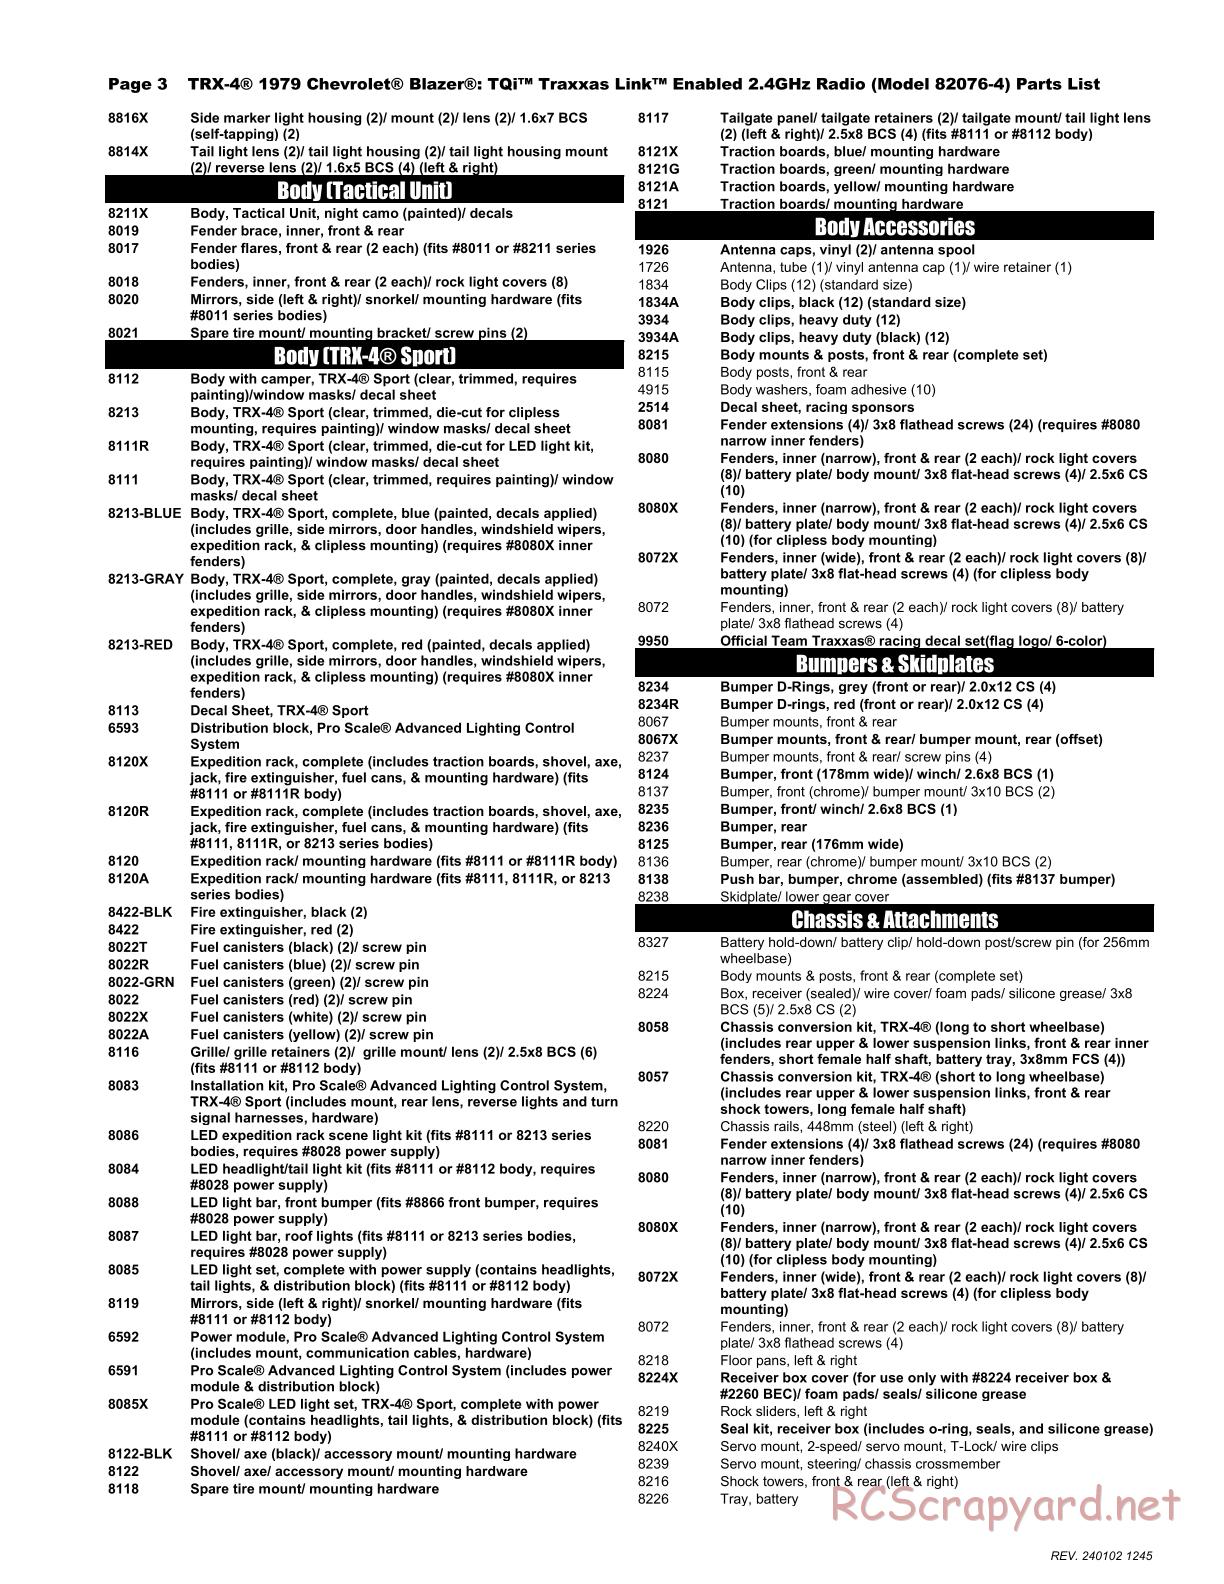 Traxxas - TRX-4 Chevrolet K5 Blazer (2019) - Parts List - Page 3